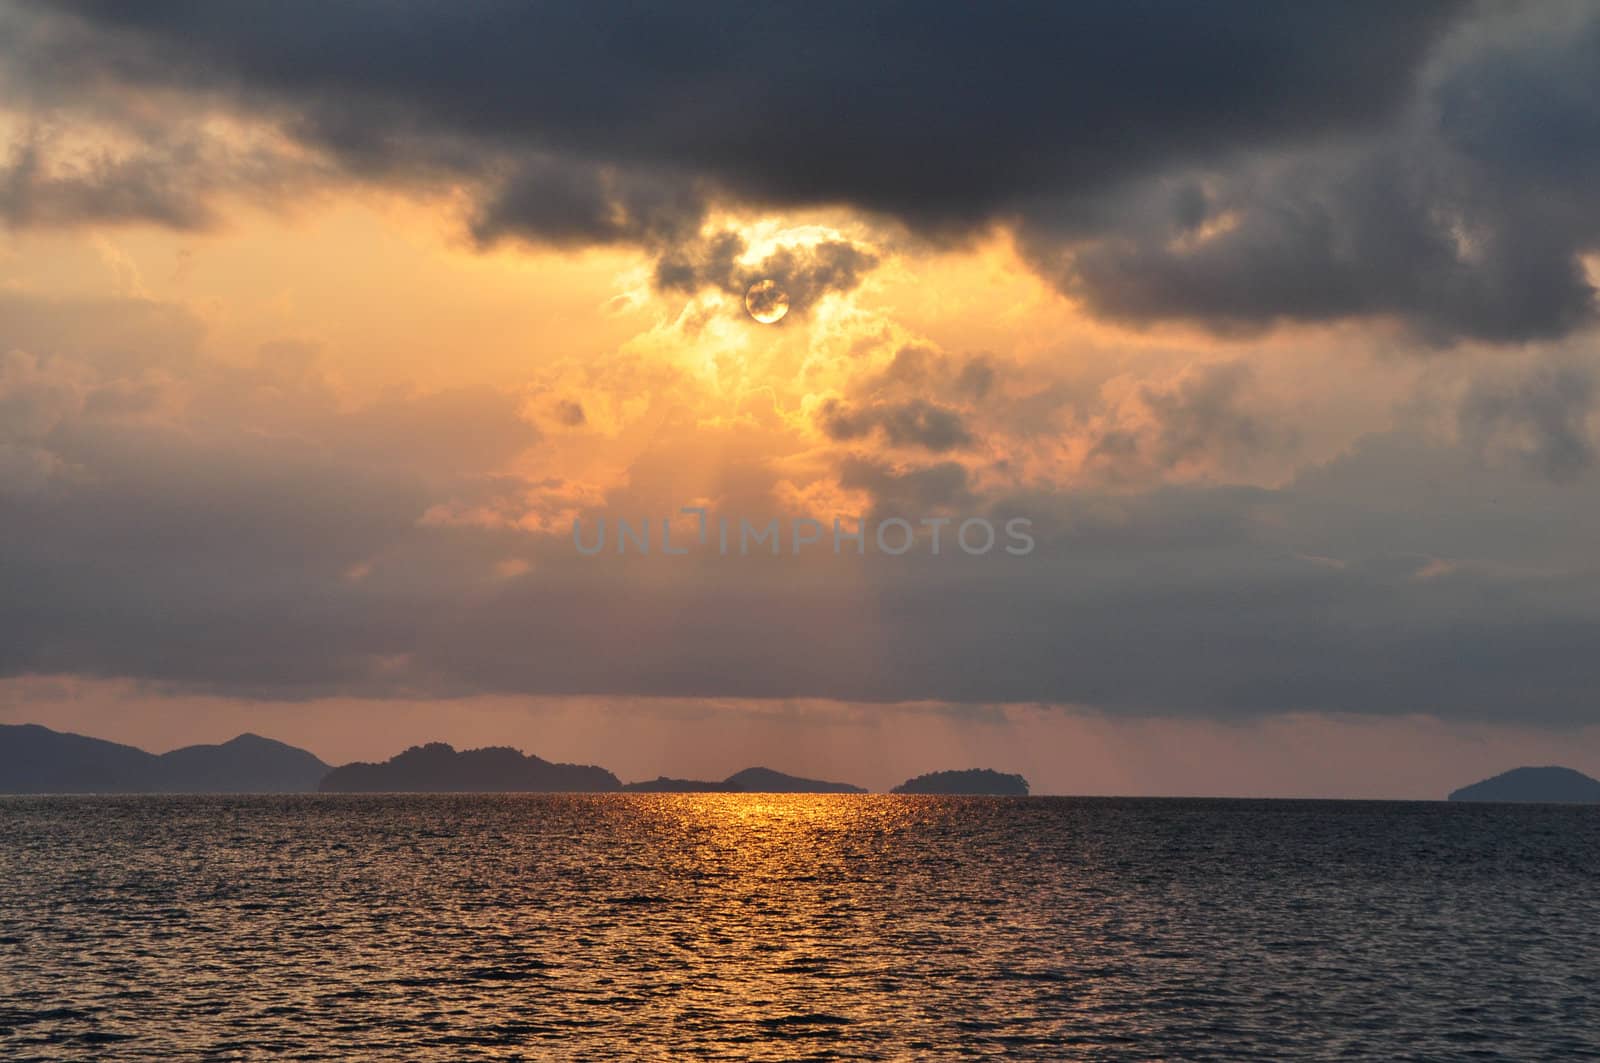 Sunrise at Chang island, Thailand